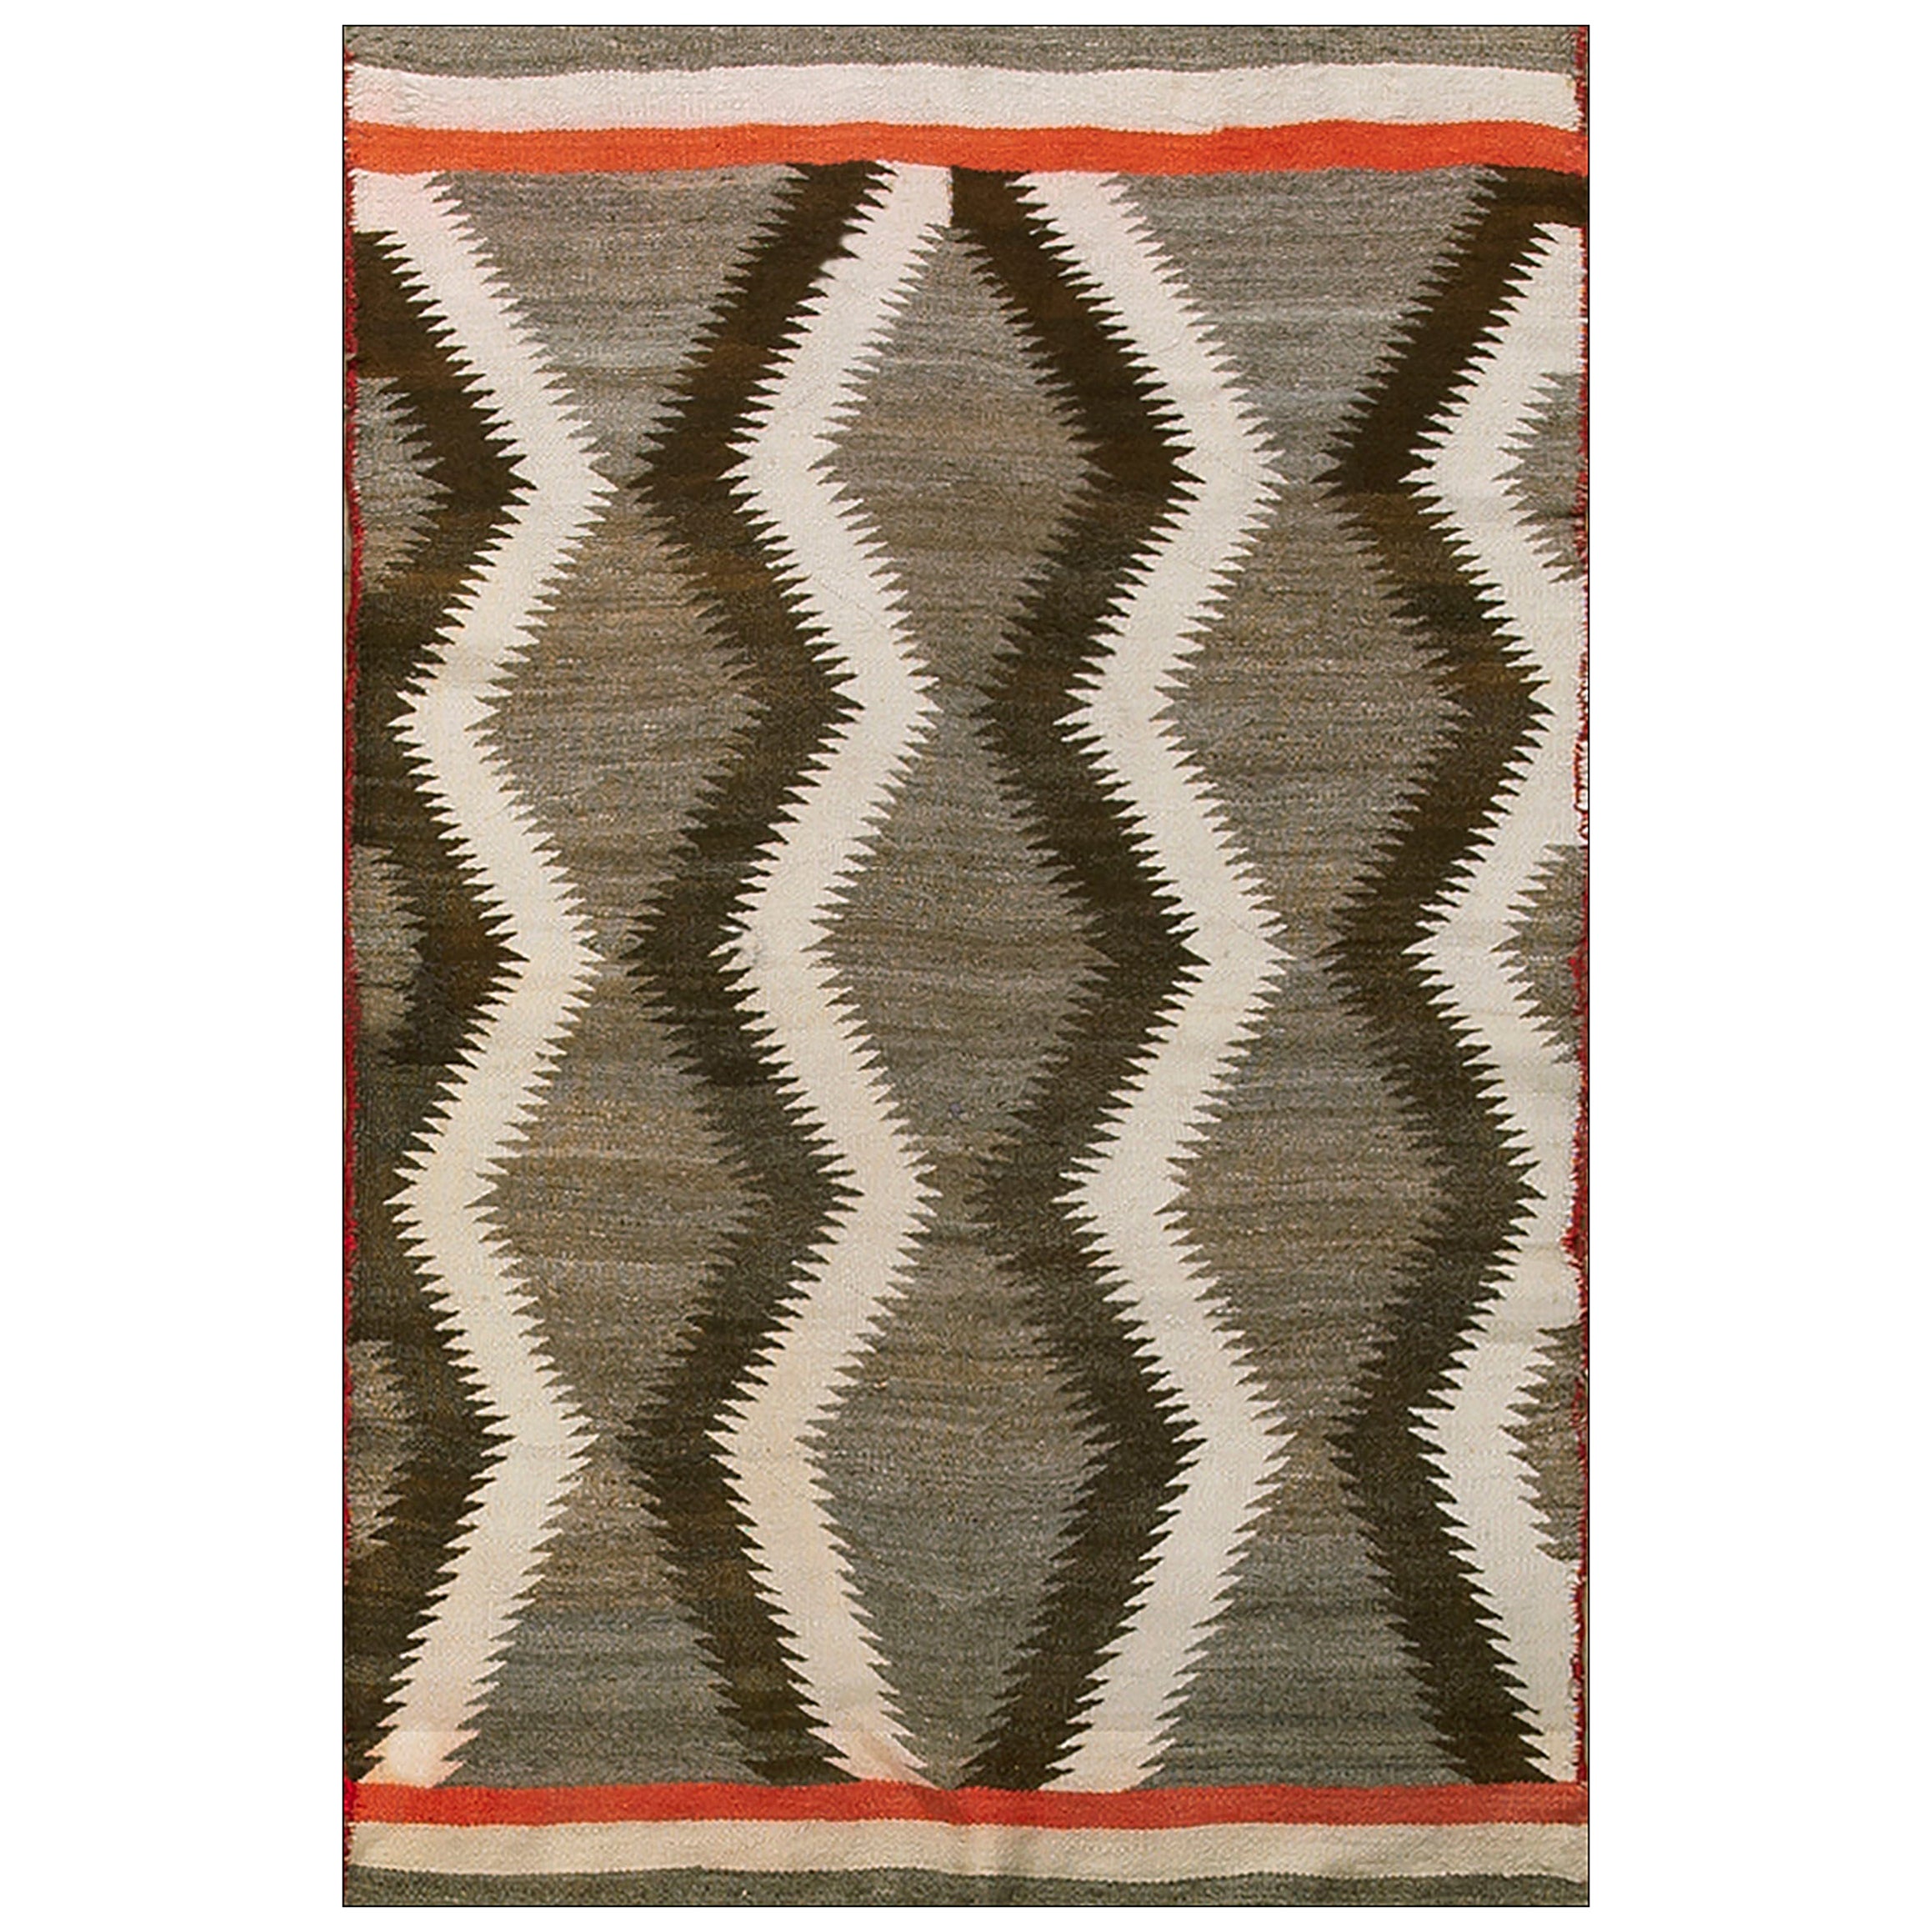 Early 20th Century American Navajo Carpet ( 3'4" x 5'3" - 102 x 160 )